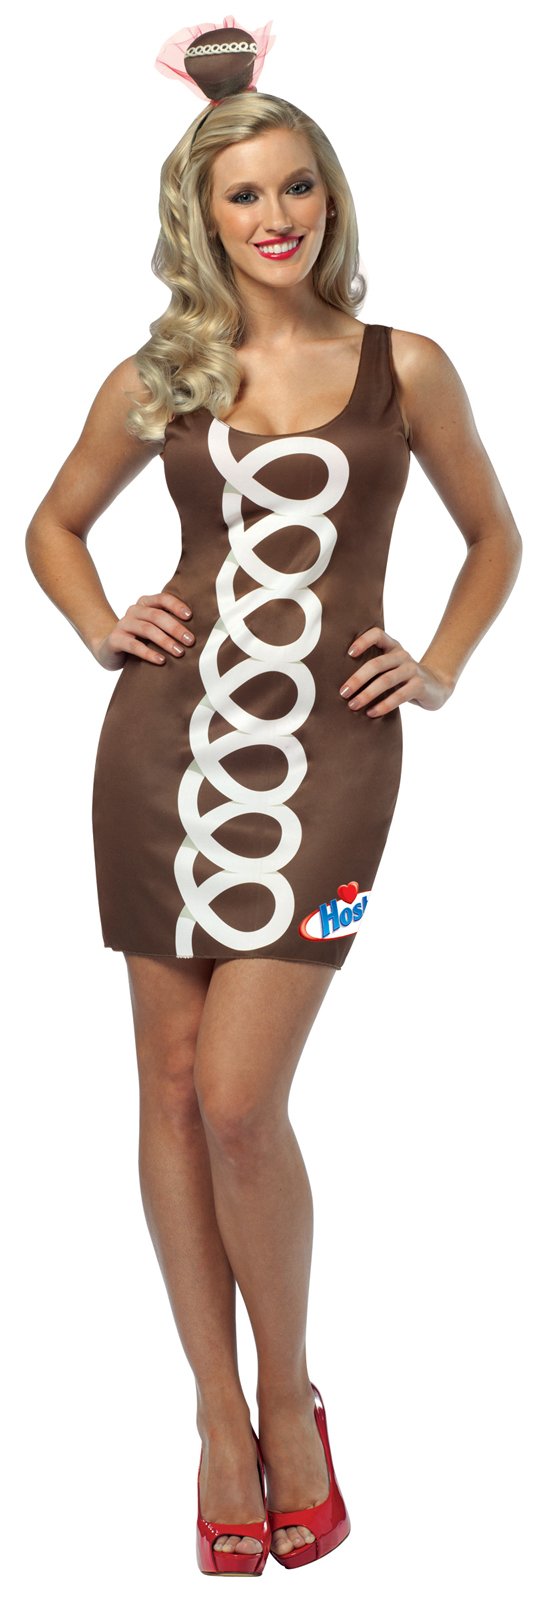 Hostess - Cupcake Dress Adult Costume